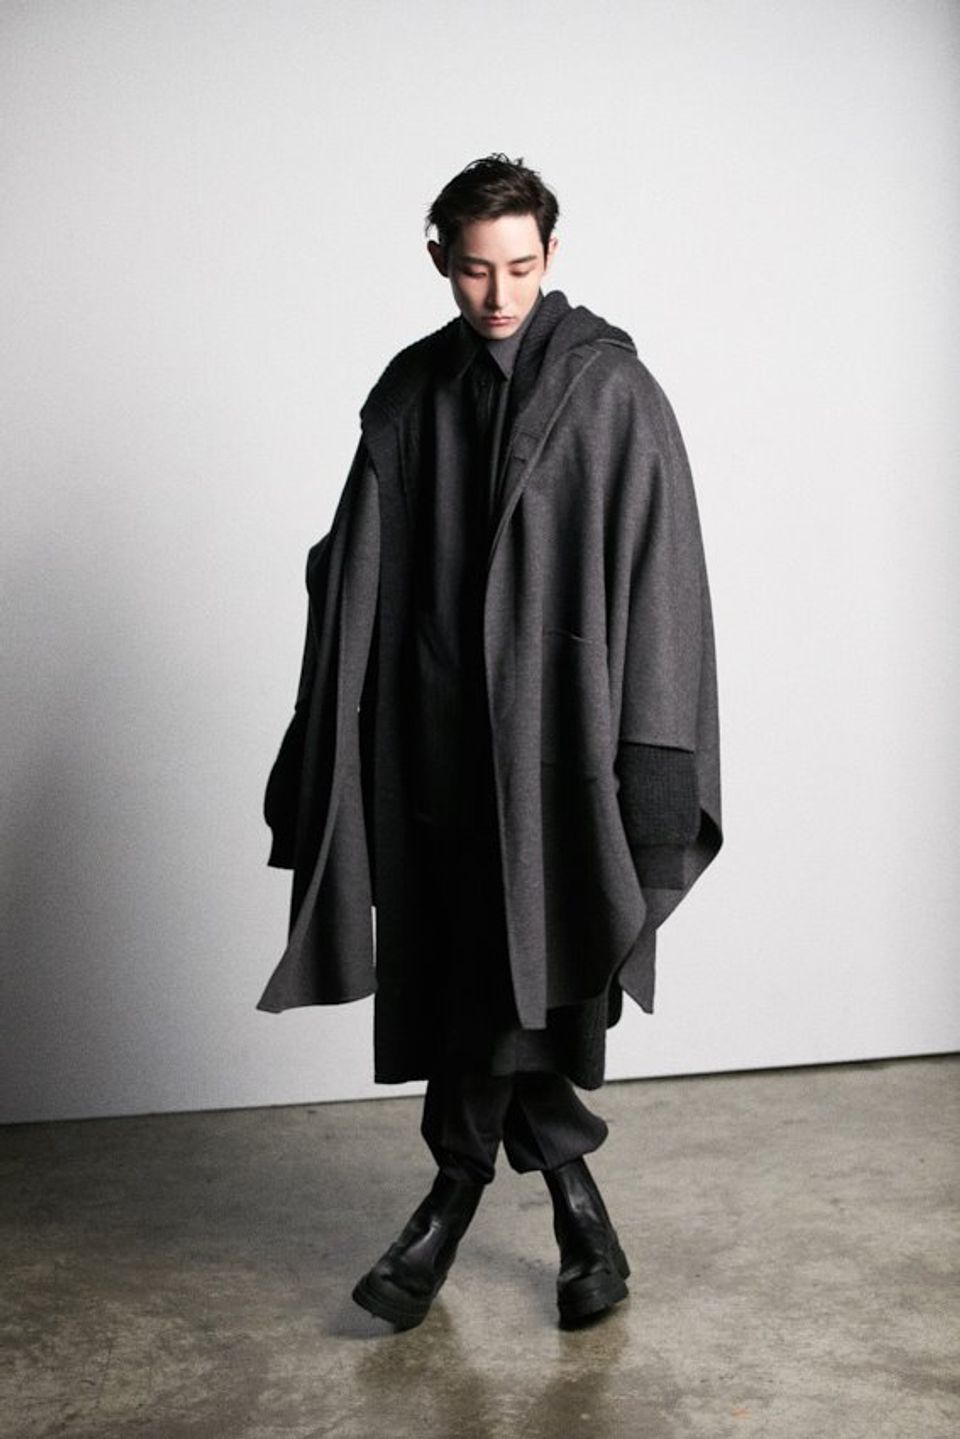 Lee SooHyuk For W Korea Magazine November Issue - Kpopmap